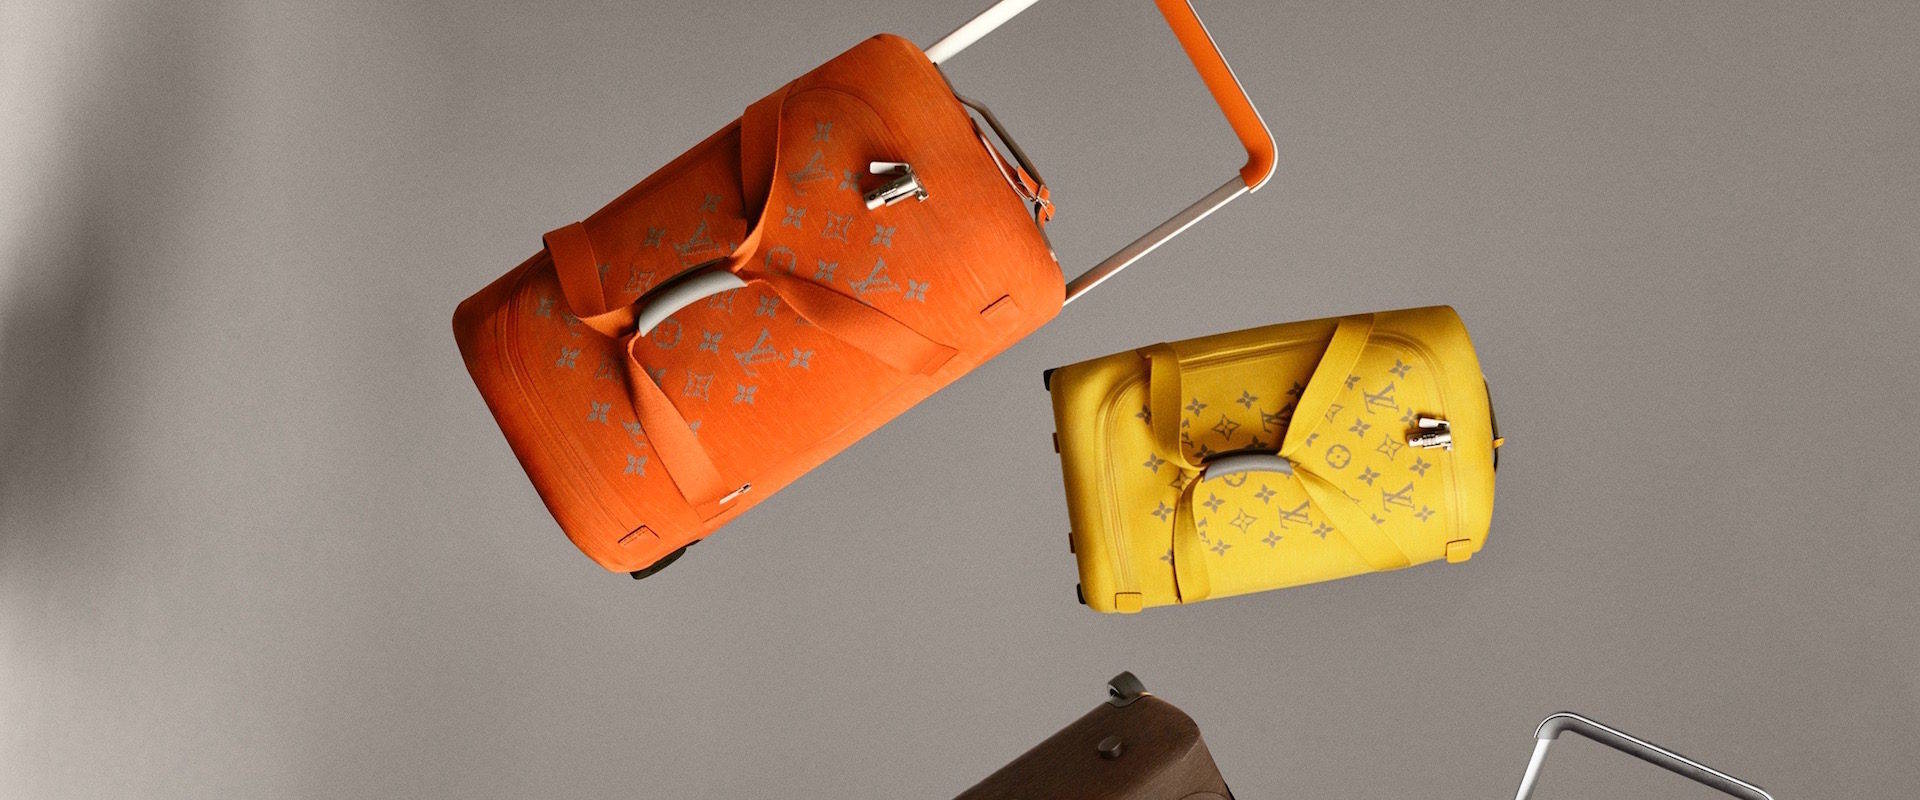 Louis Vuitton Launches Horizon Soft With Designer Marc Newson